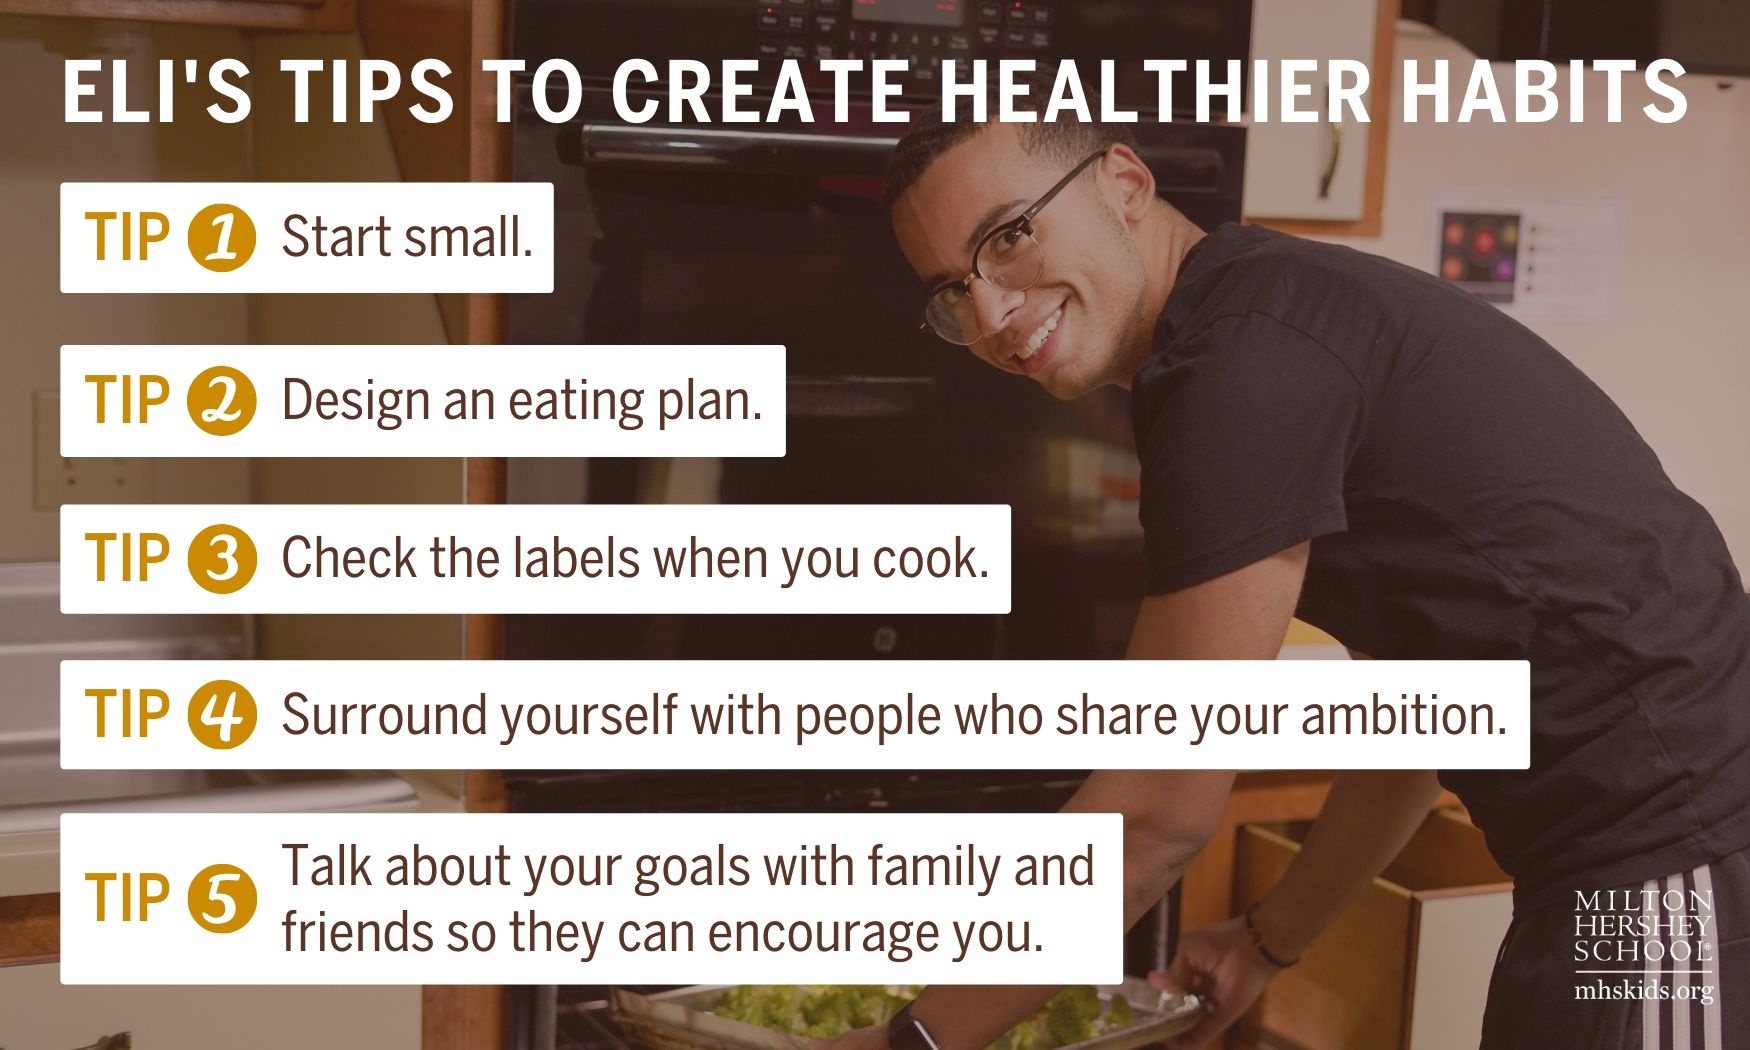 Milton Hershey School junior, Eli, shares his tips to create healthier habits.